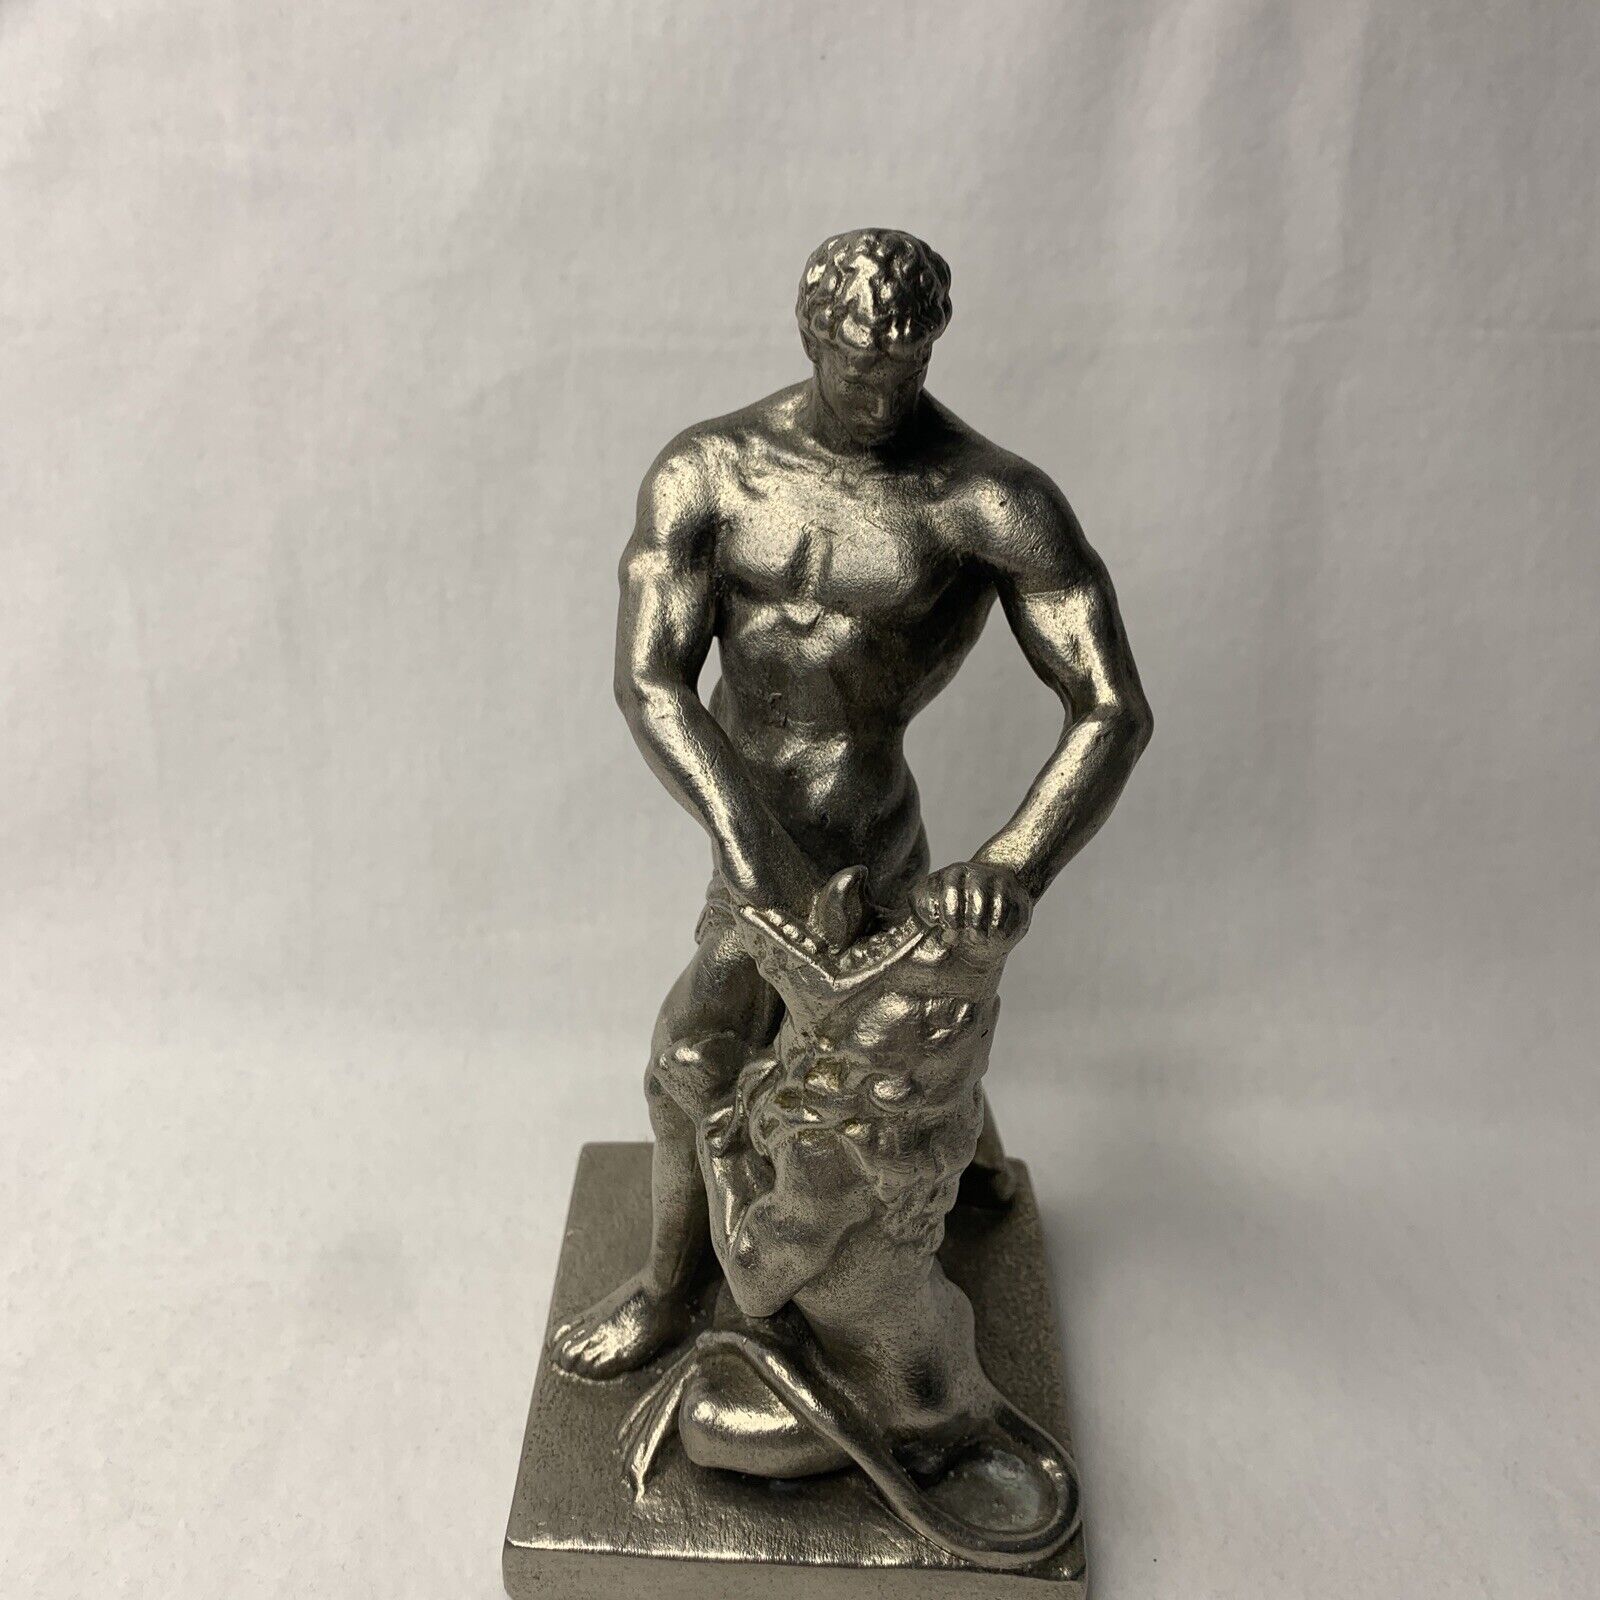 Vintage Bronze/Metal Sculpture of Heracles Slaying Nemean Lion Classic Mythology